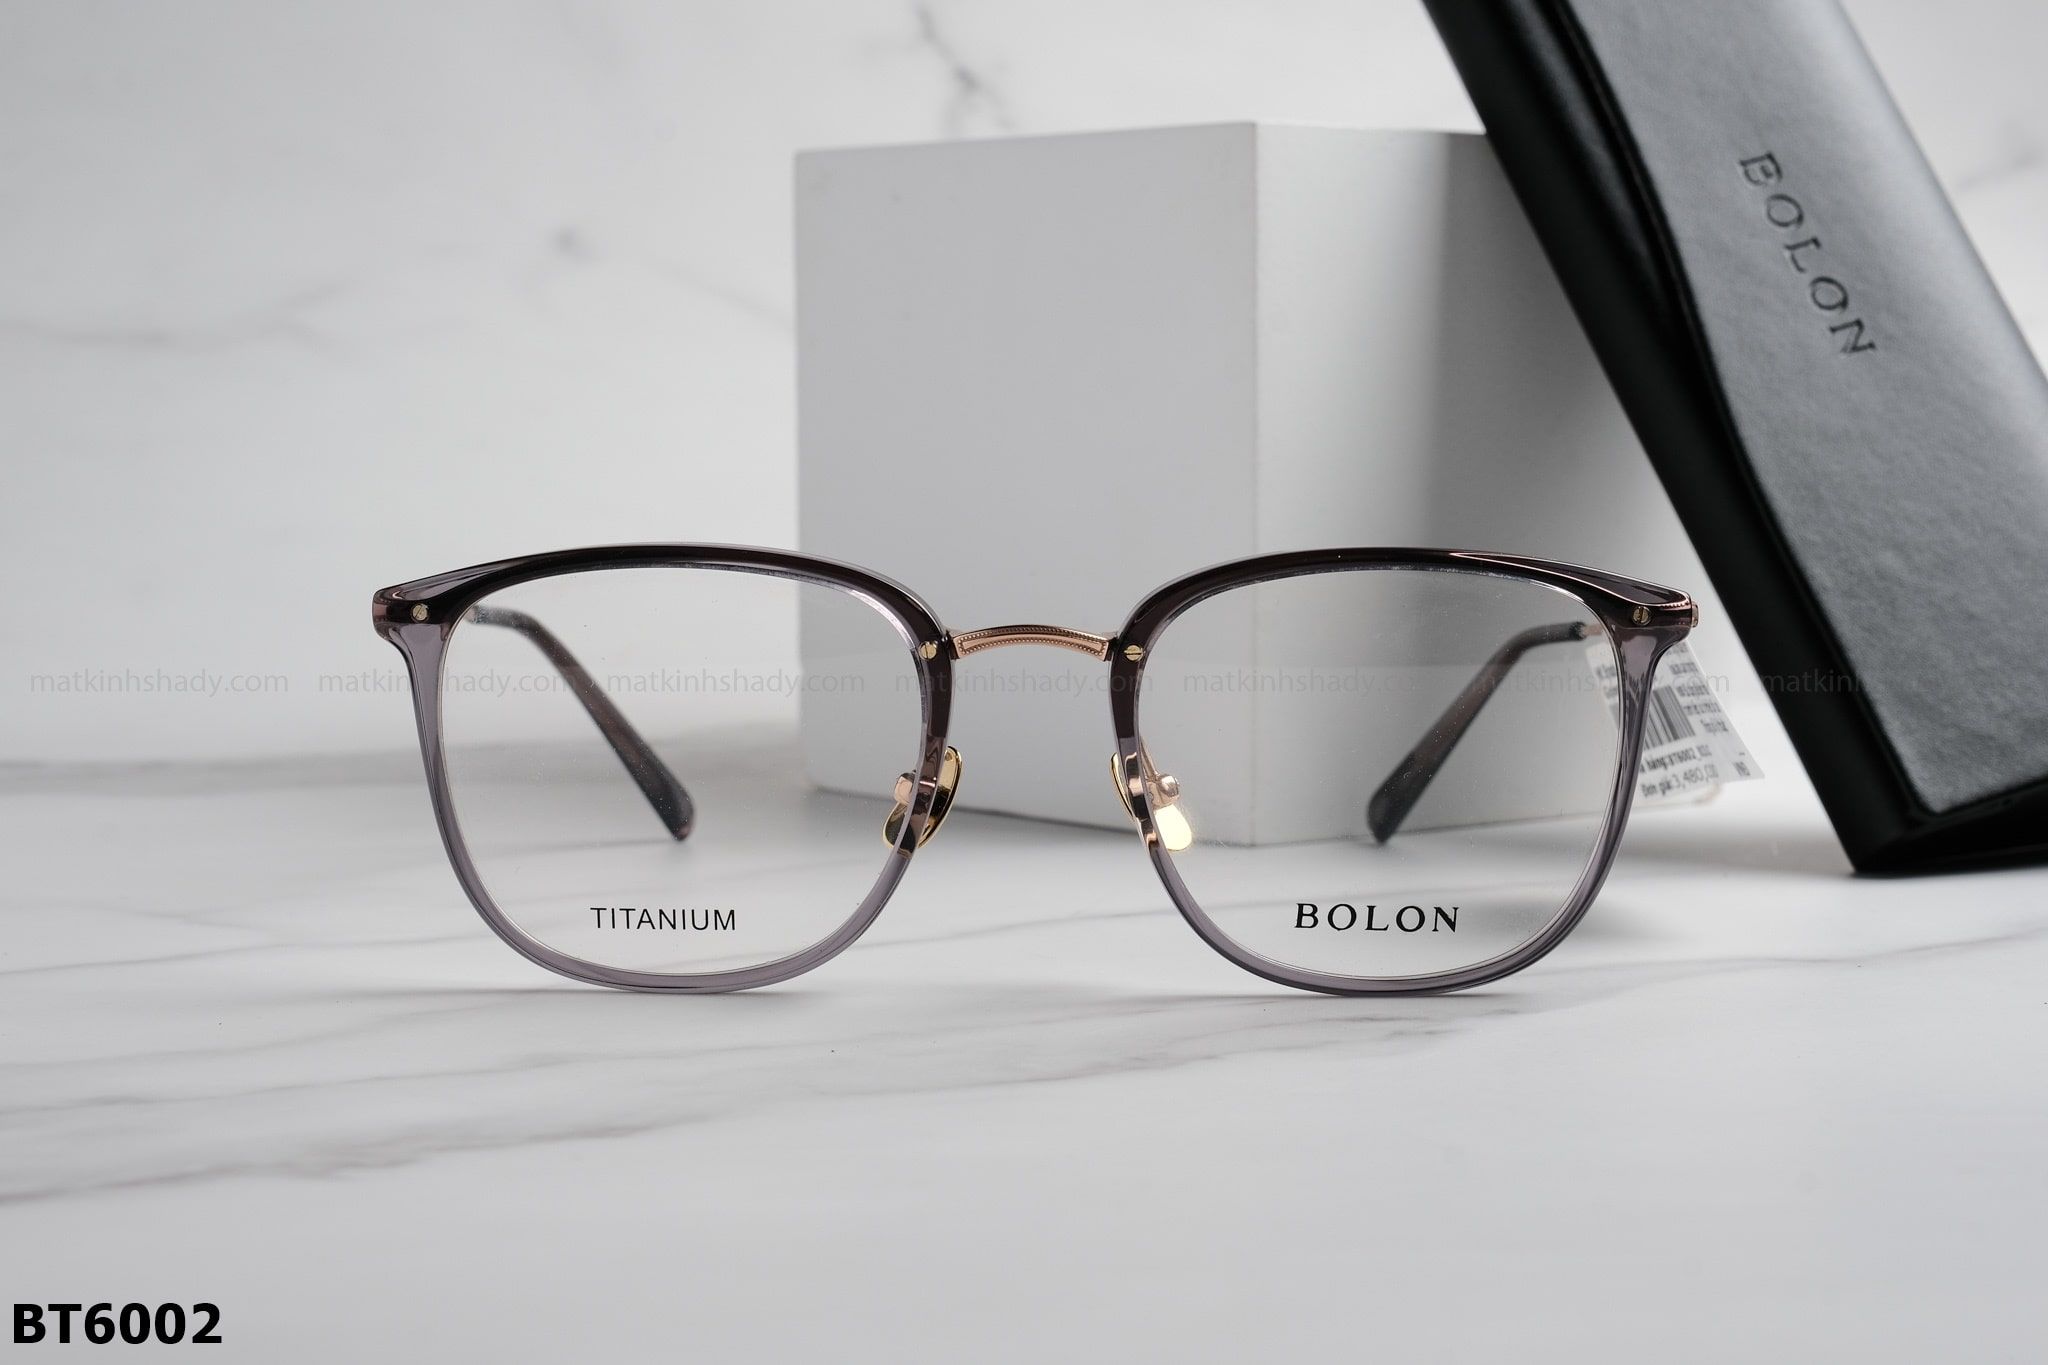  Bolon Eyewear - Glasses - BT6002 